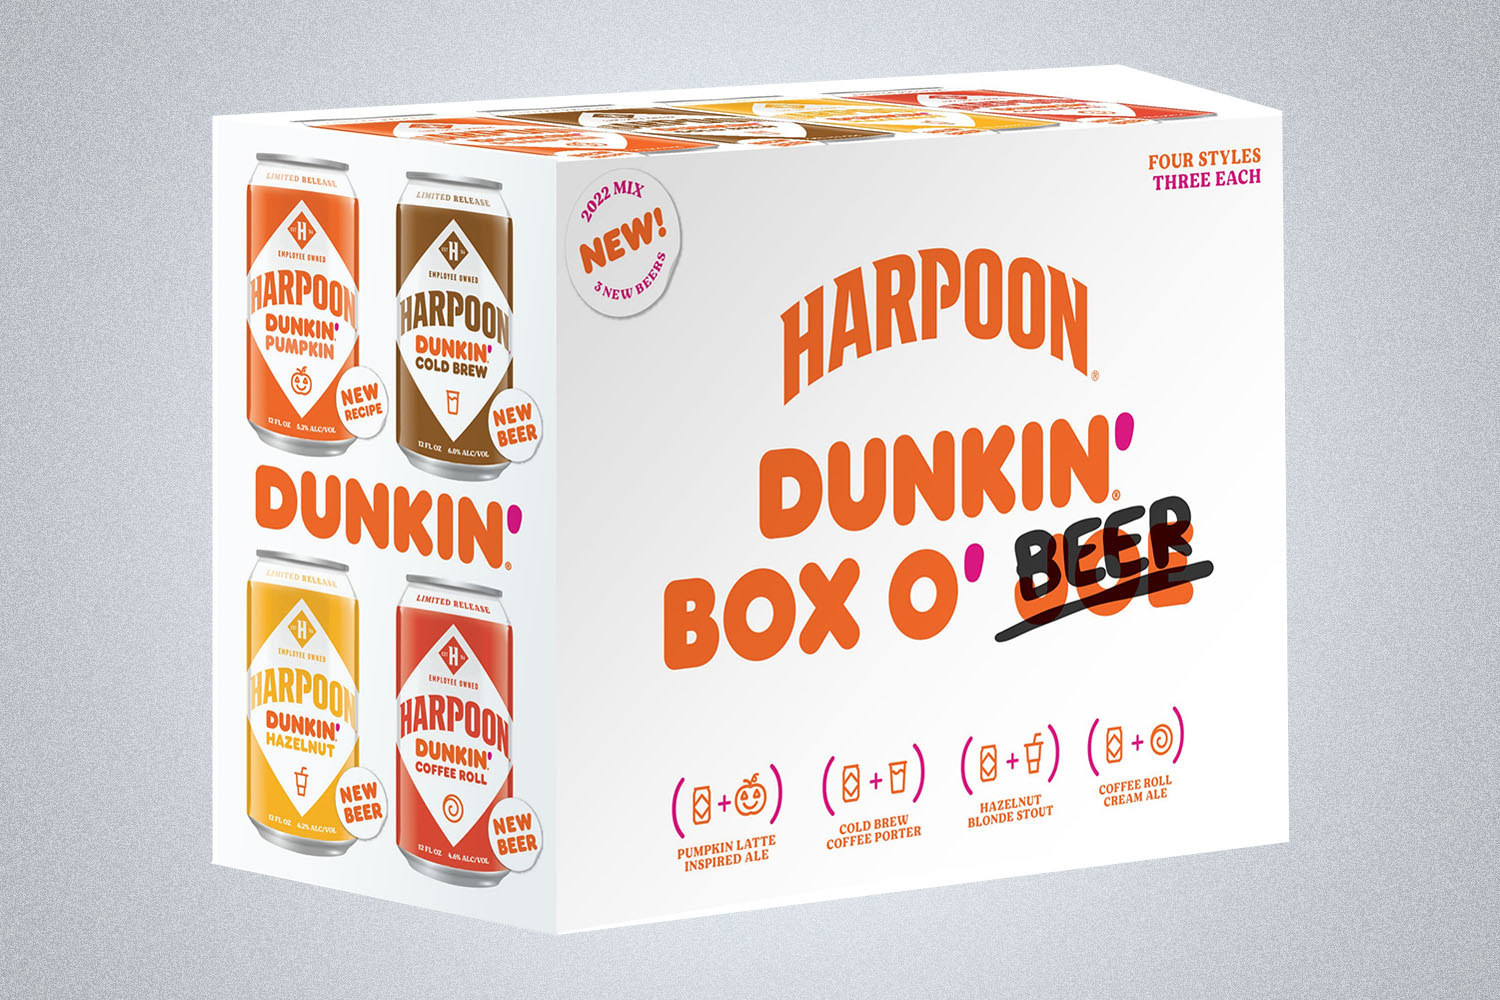 A box of Harpoon x Dunkin' Box O' Beer